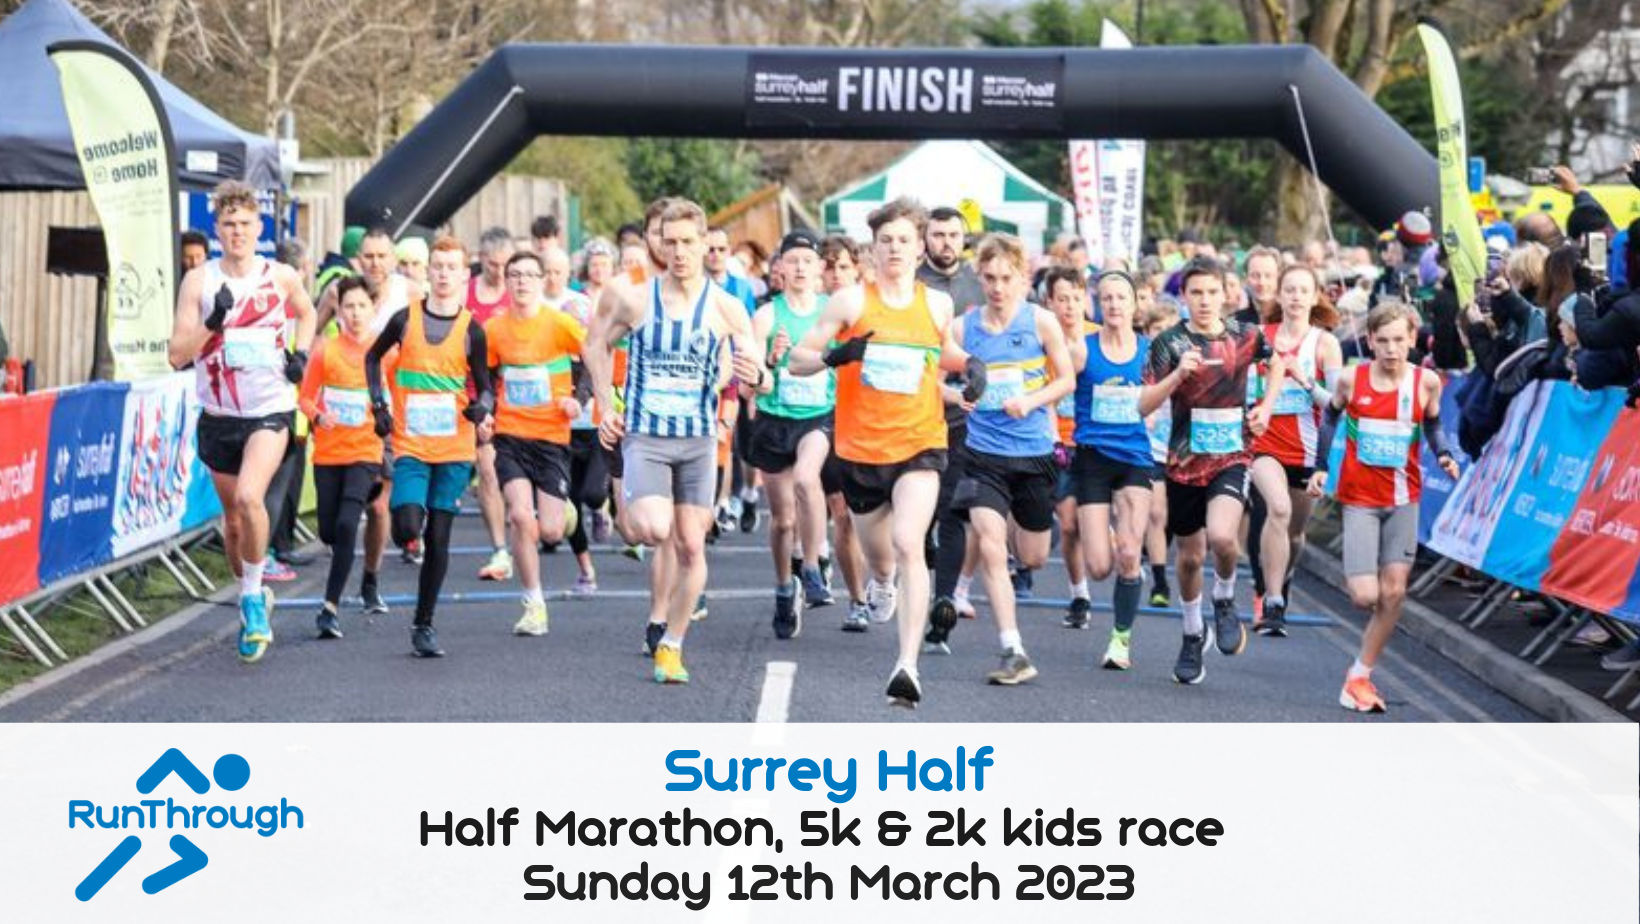 Image for RunThrough Surrey Half Marathon